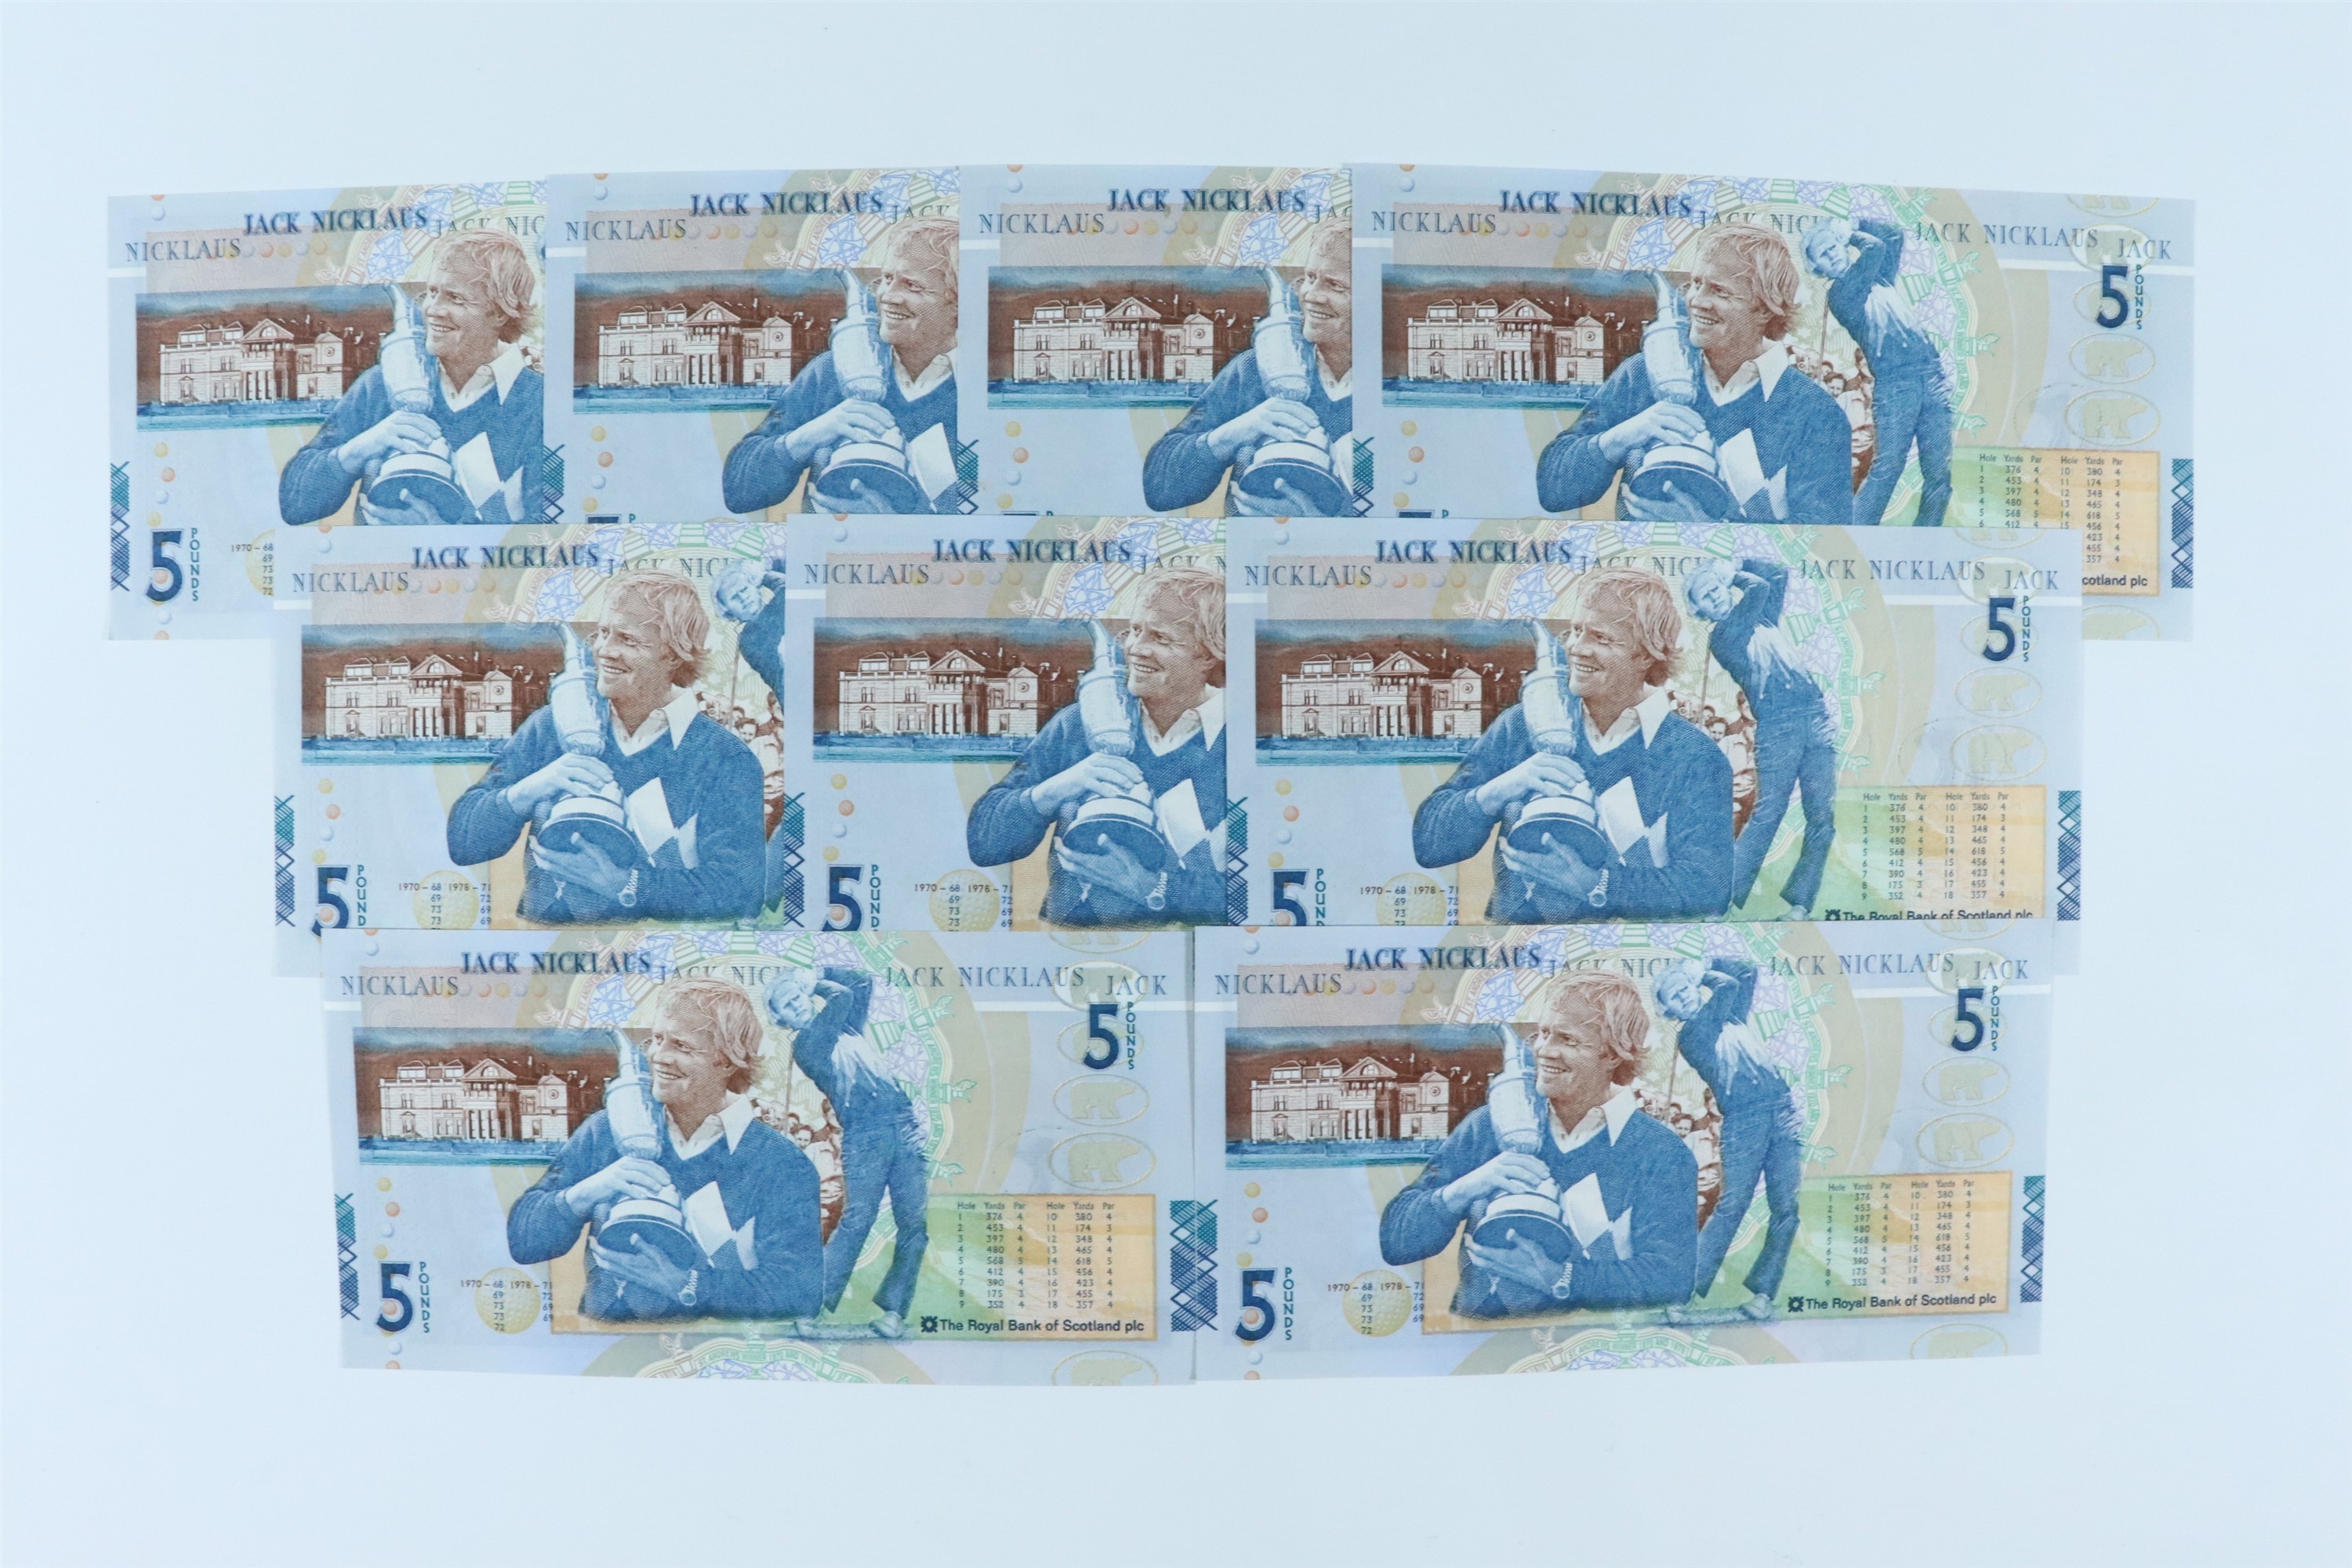 A consecutive run of nine The Royal Bank of Scotland Jack Nicklaus five pounds banknotes, Goodwin